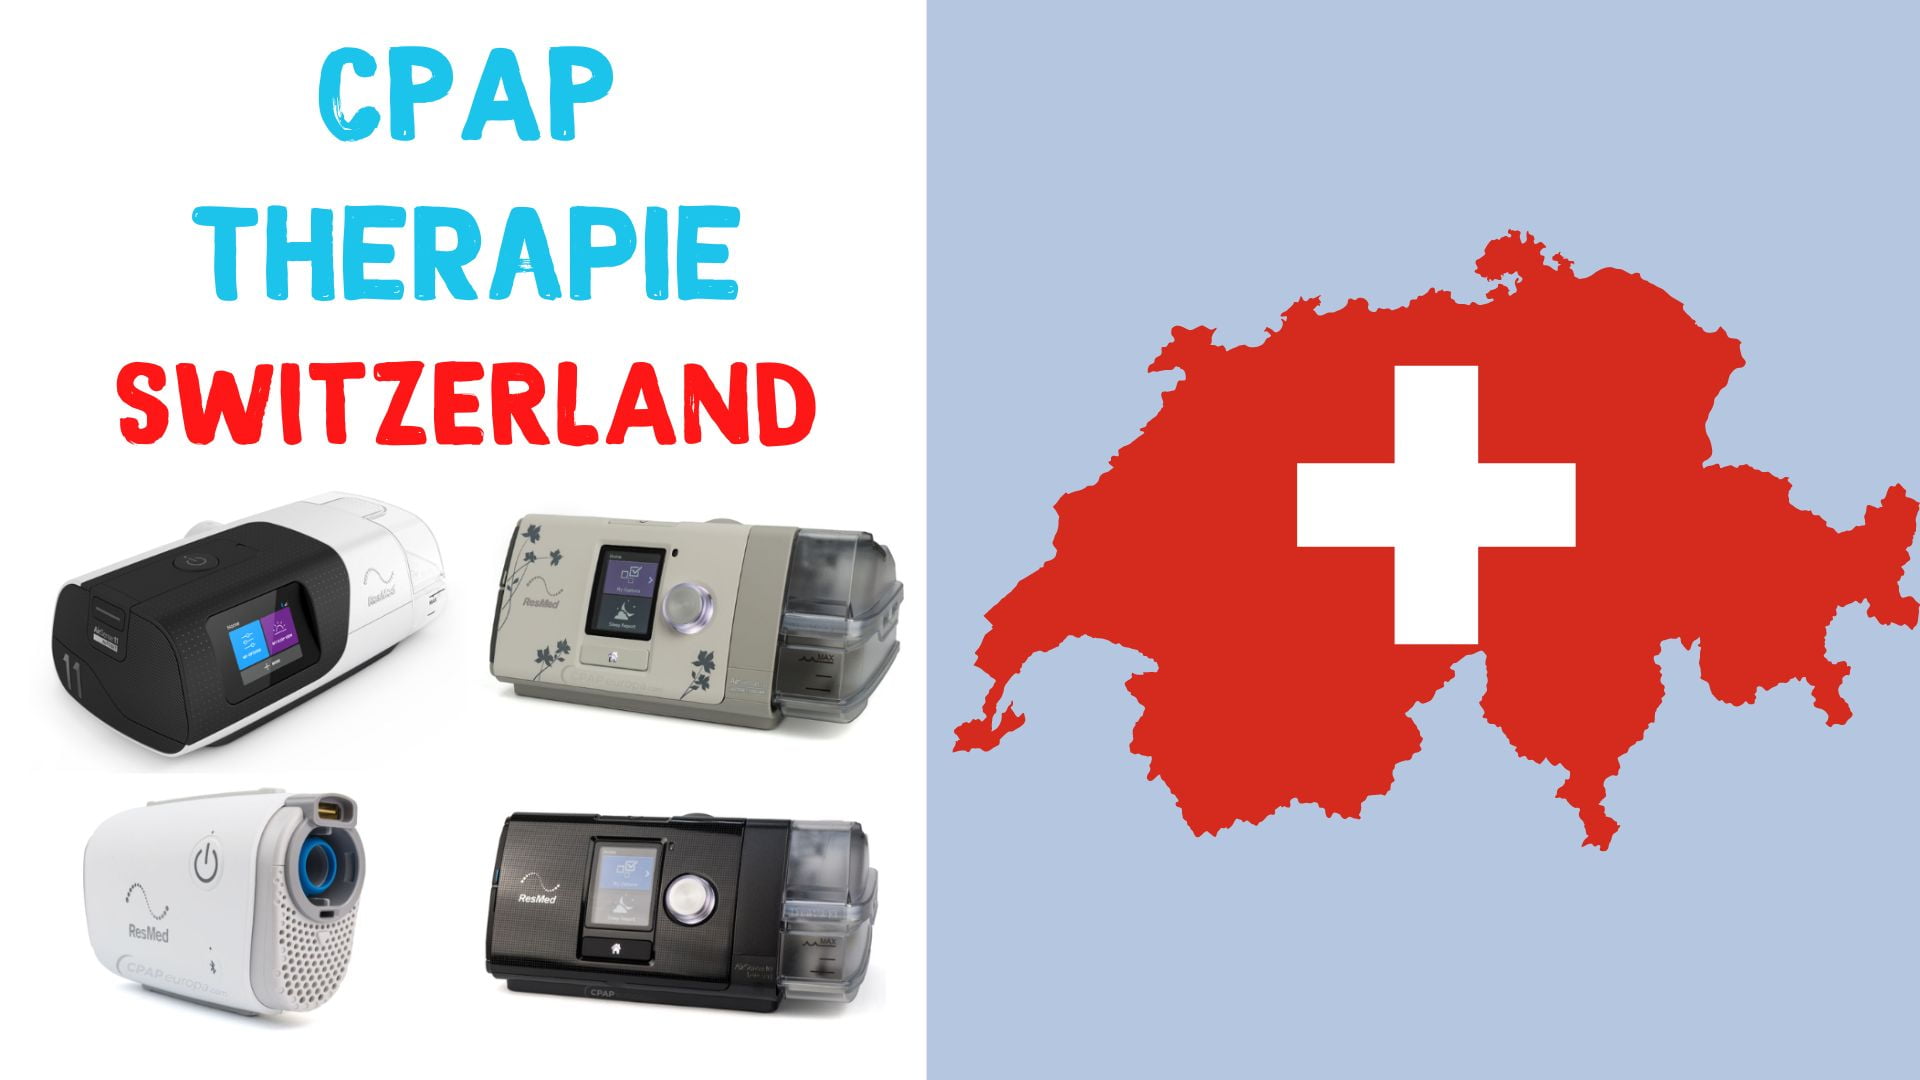 CPAP therapie Switzerland cpapeuropa